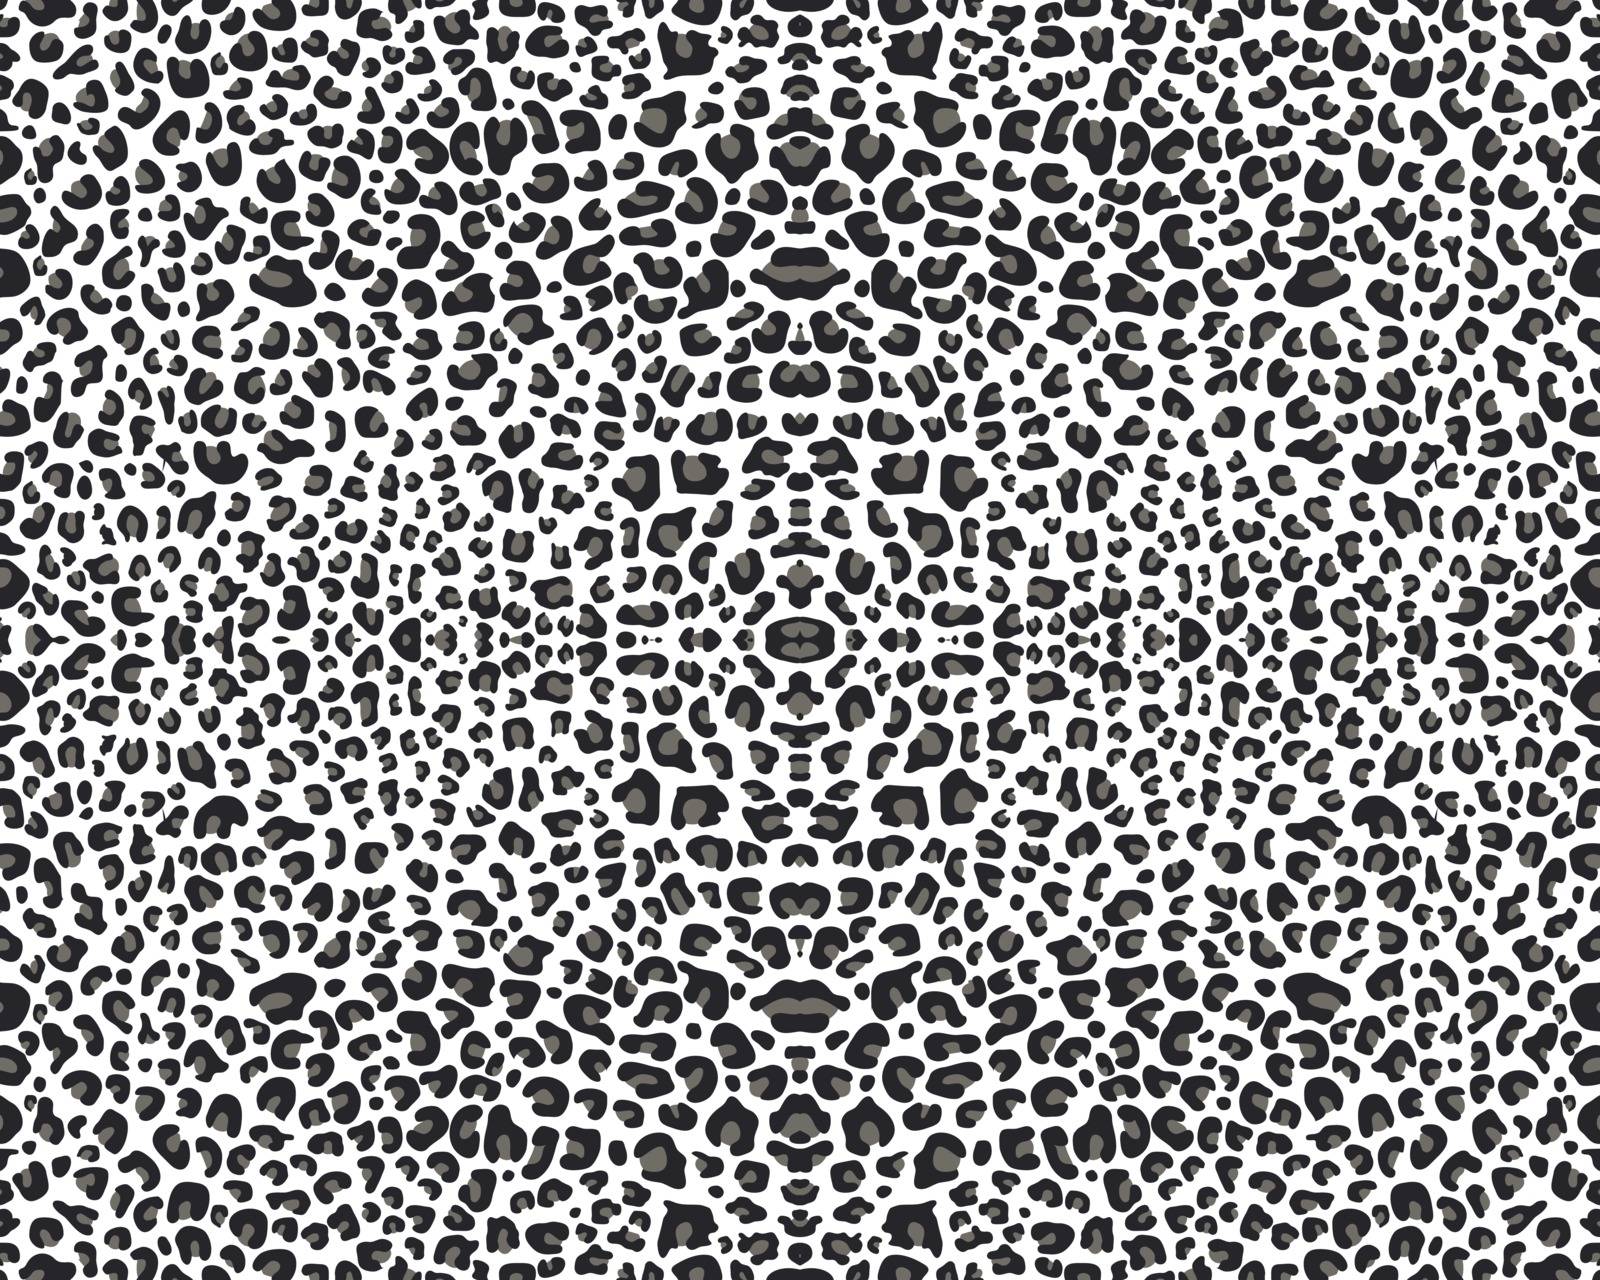 Seamless leopard repeat pattern, creative design templates